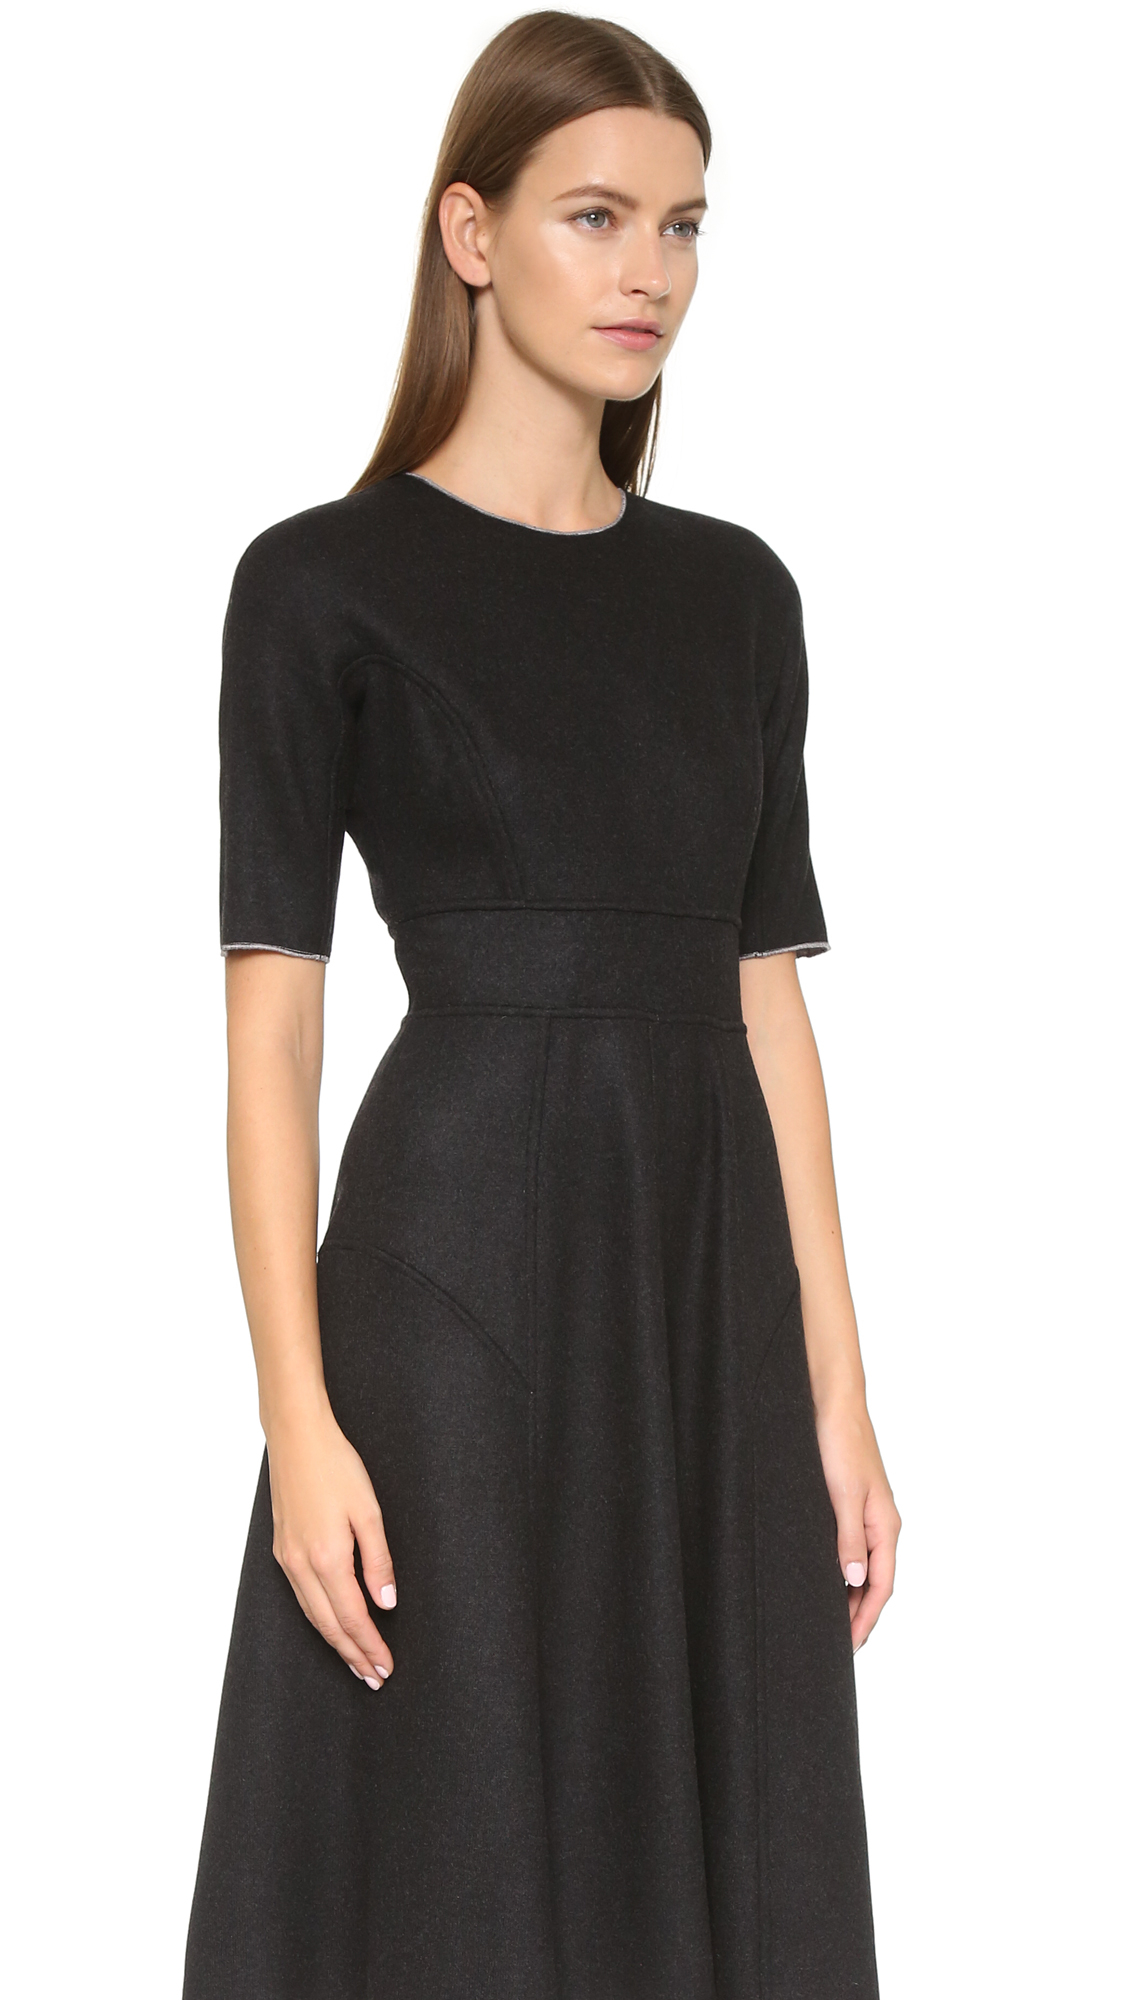 Lela Rose Reversible Cashmere Dress - Grey/black | Lyst